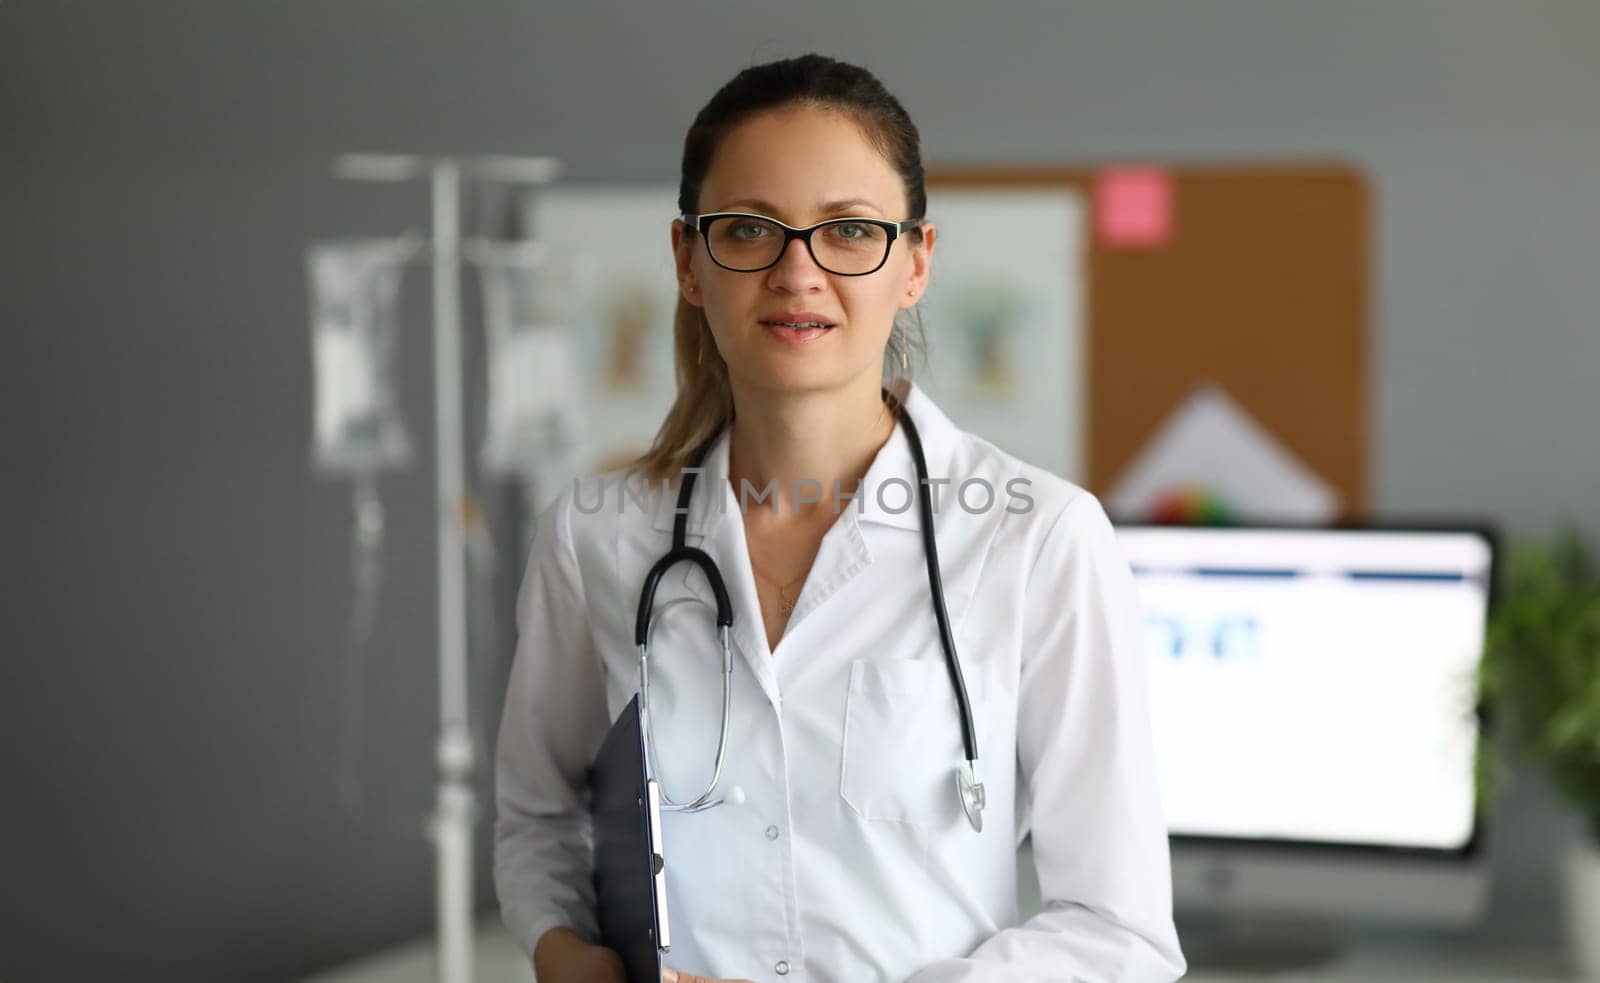 Adult caucasian female doctor against hospital office background portrait, Medical education concept.